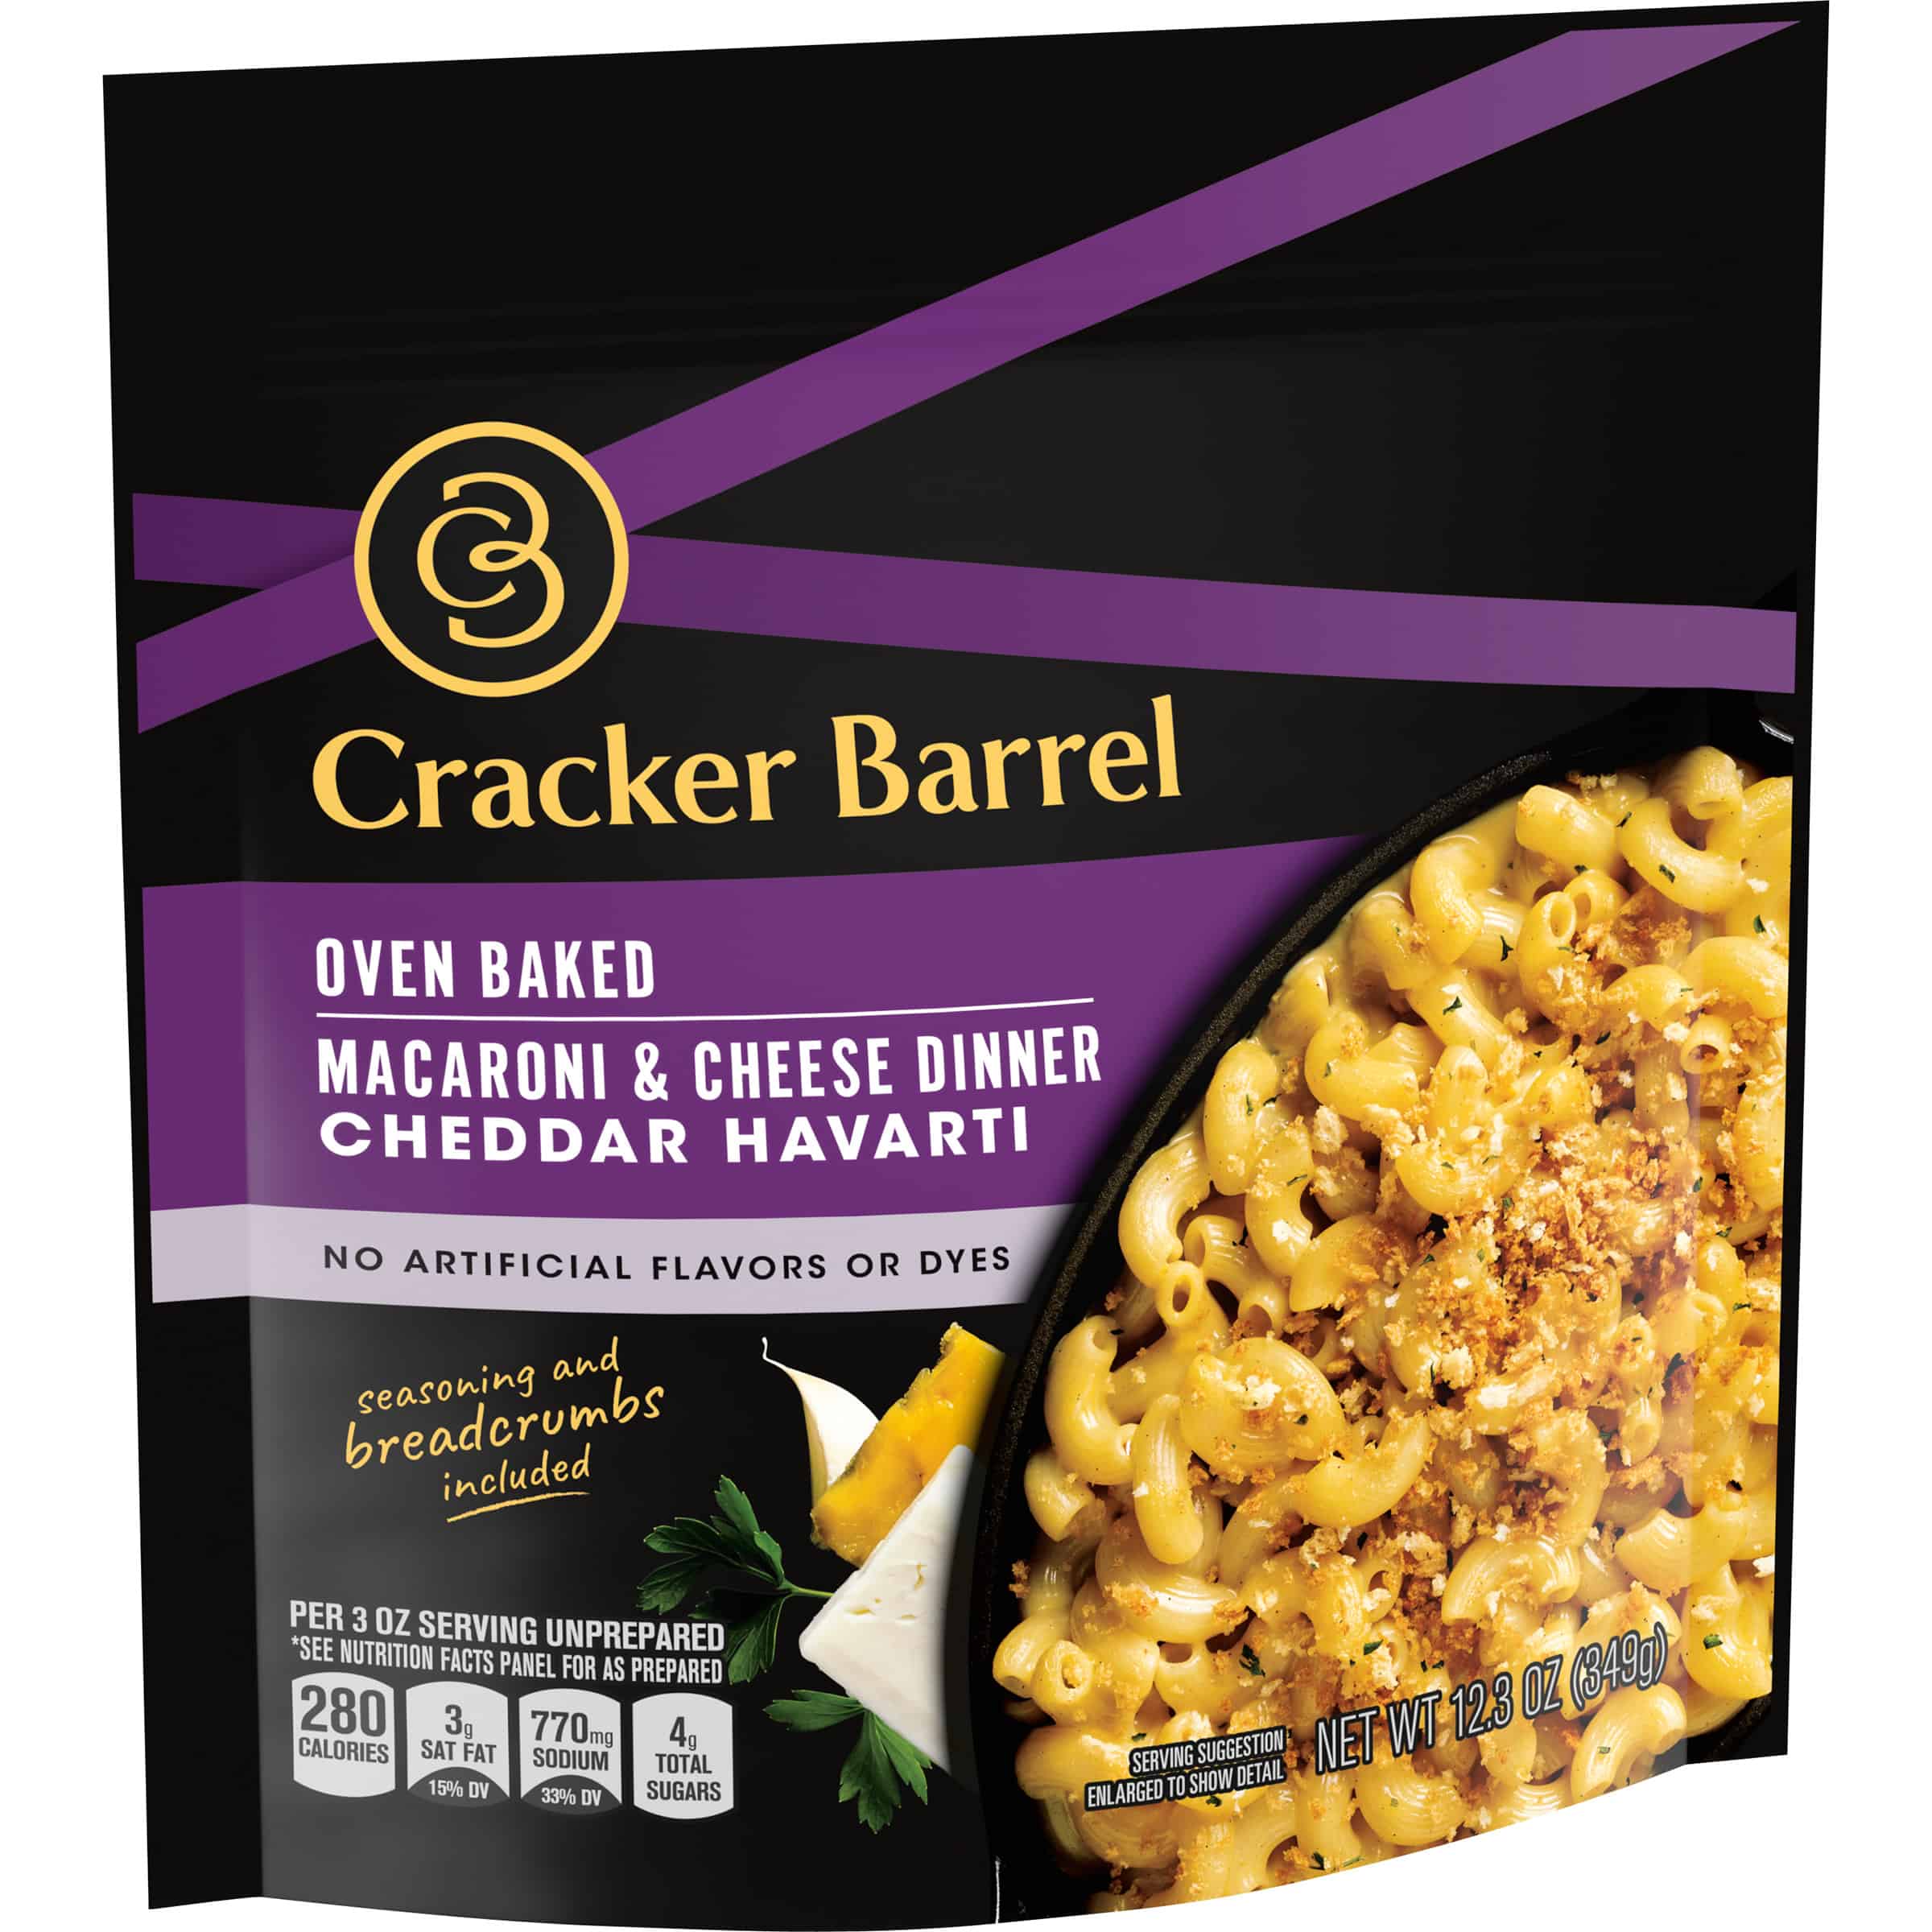 Cracker Barrel Oven Baked Havarti Macaroni and Cheese Dinner, 12.3 oz ...